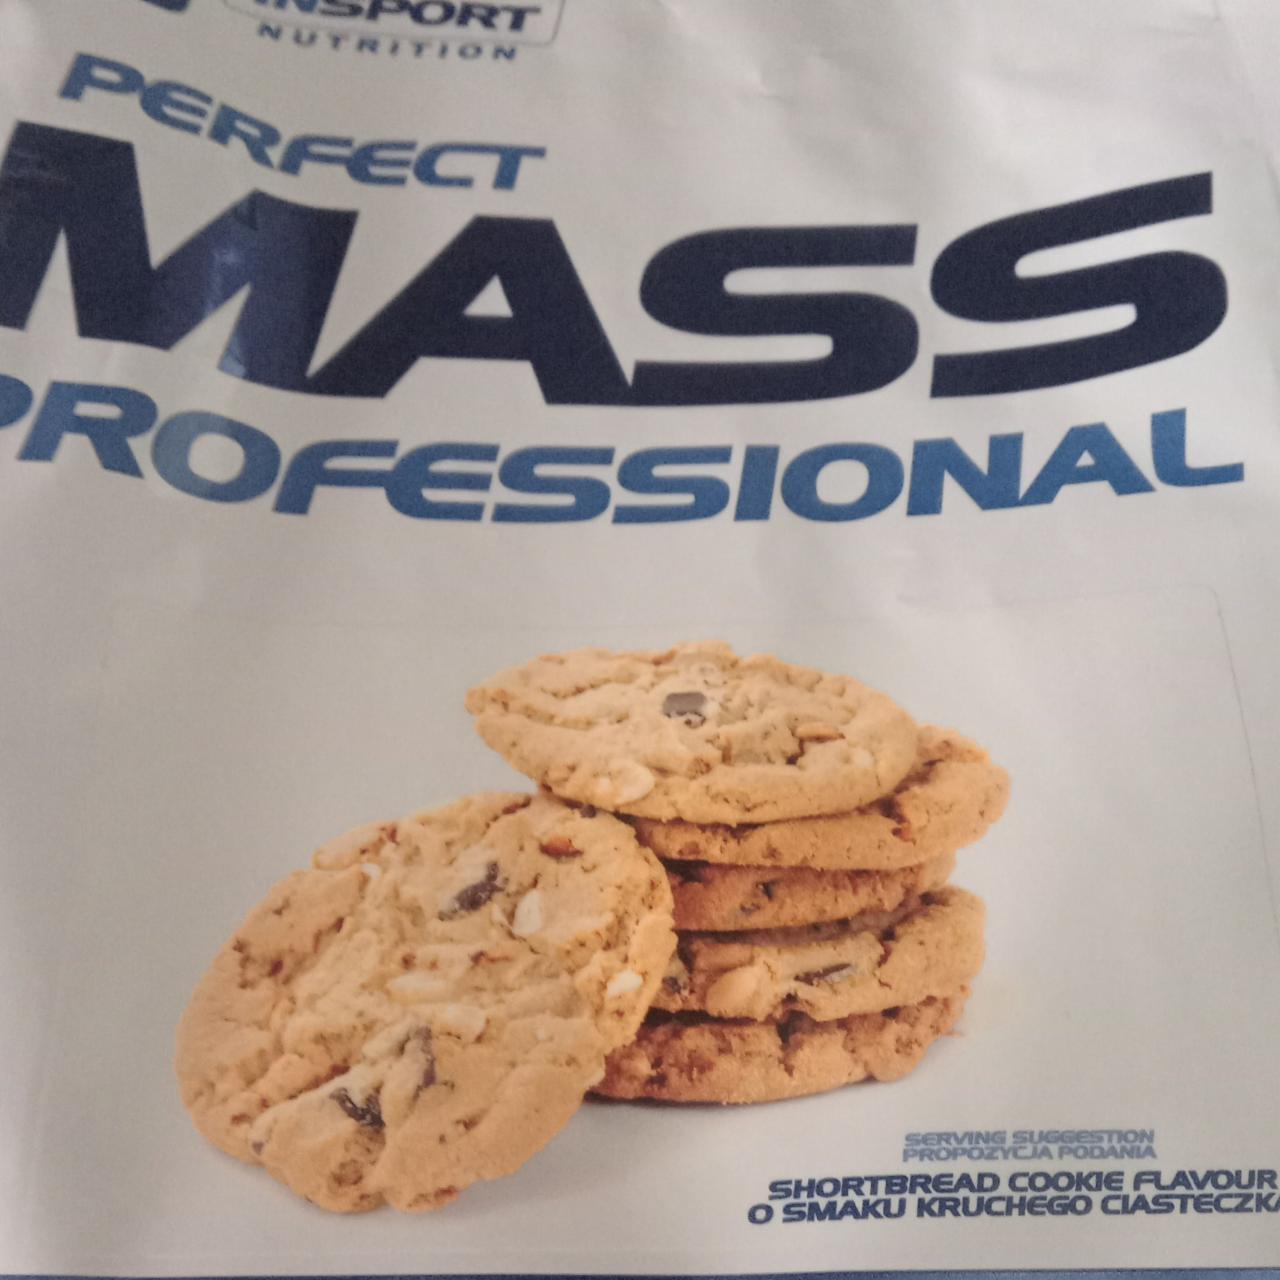 Zdjęcia - Perfect mass professional cookie insport